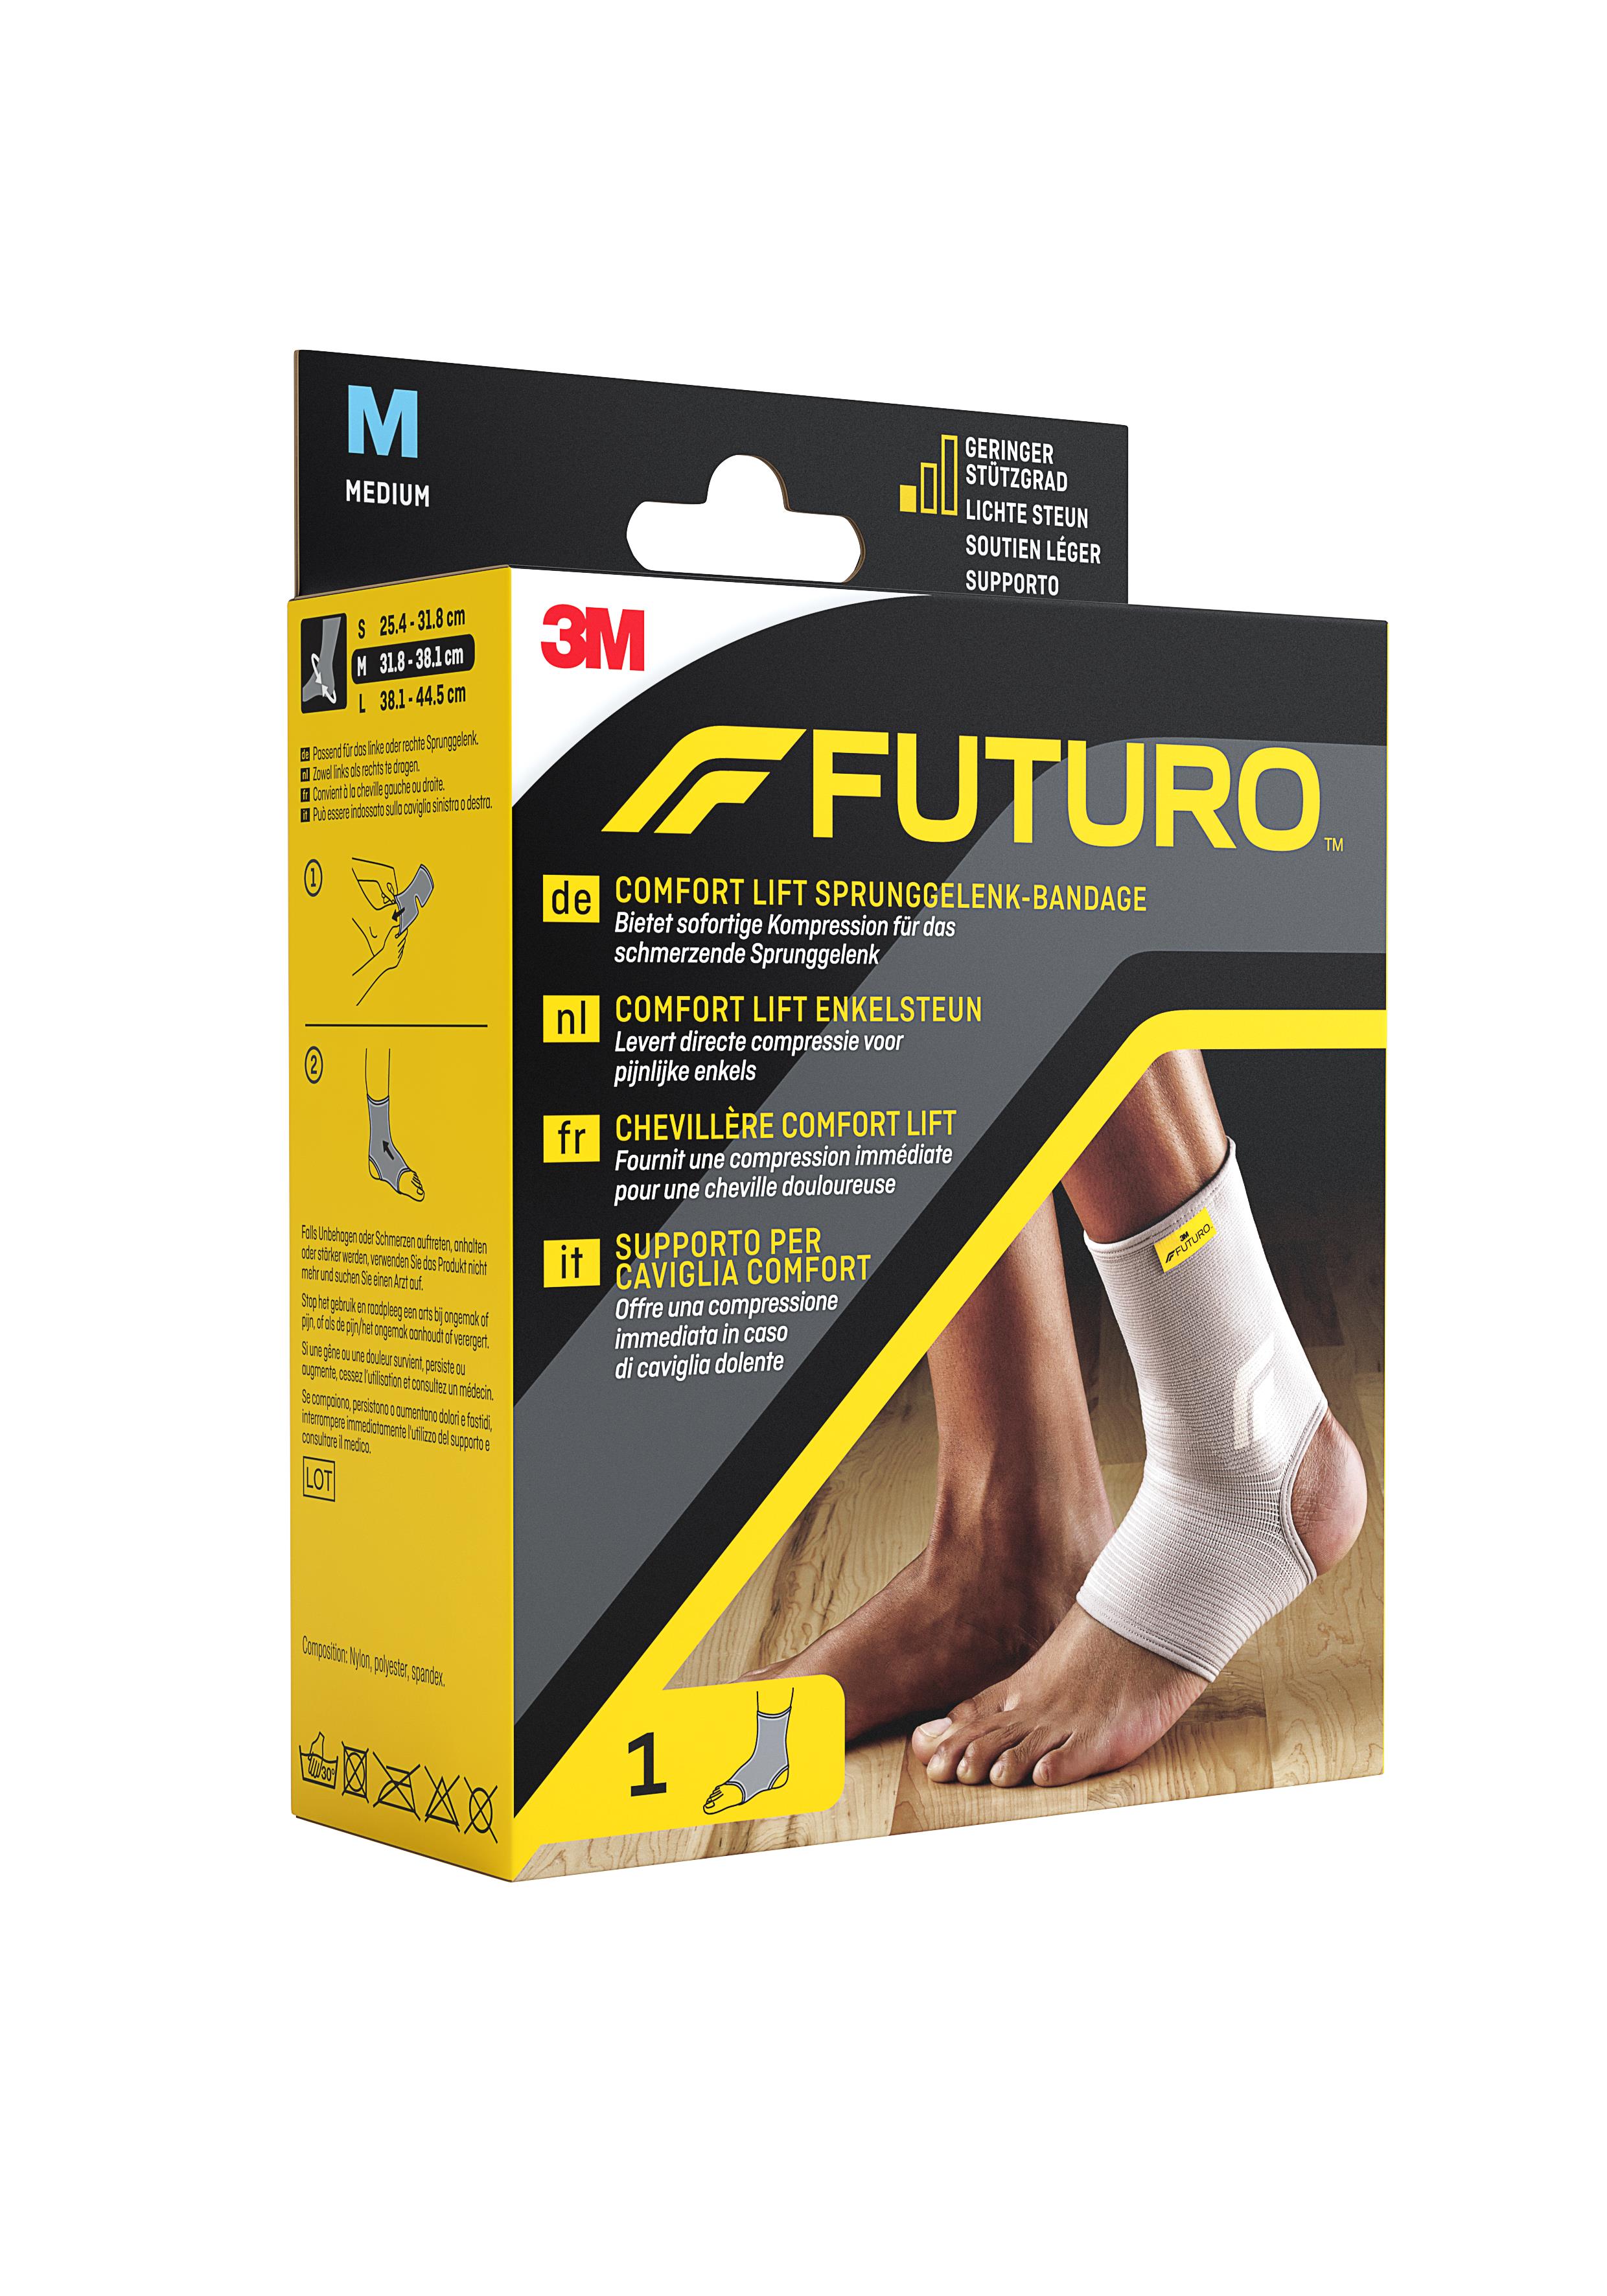 3M FUTURO Comfort Lift Sprunggel-Bandage M